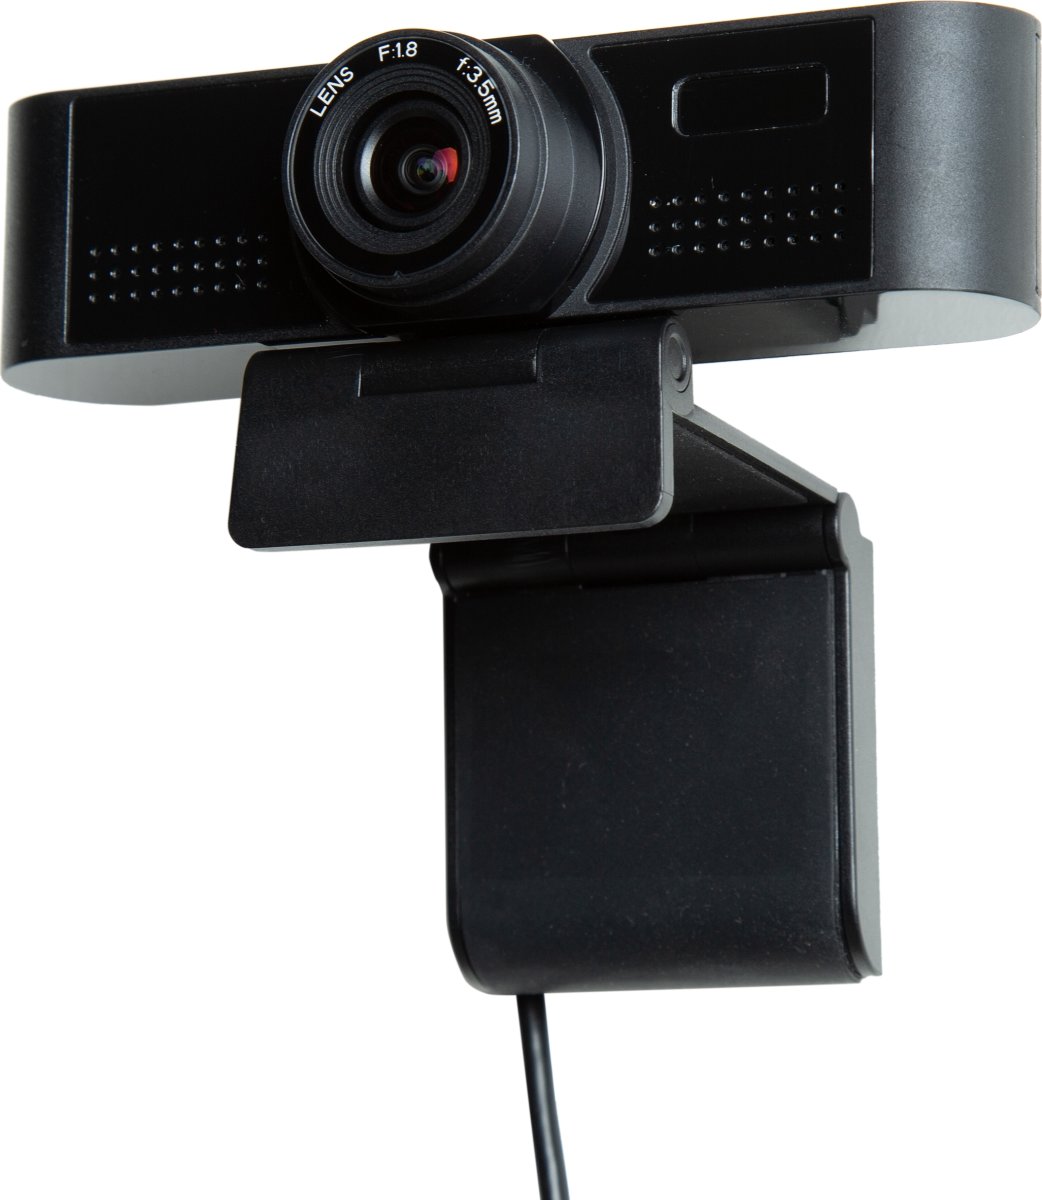 i3Camera F1201 Full HD webcam